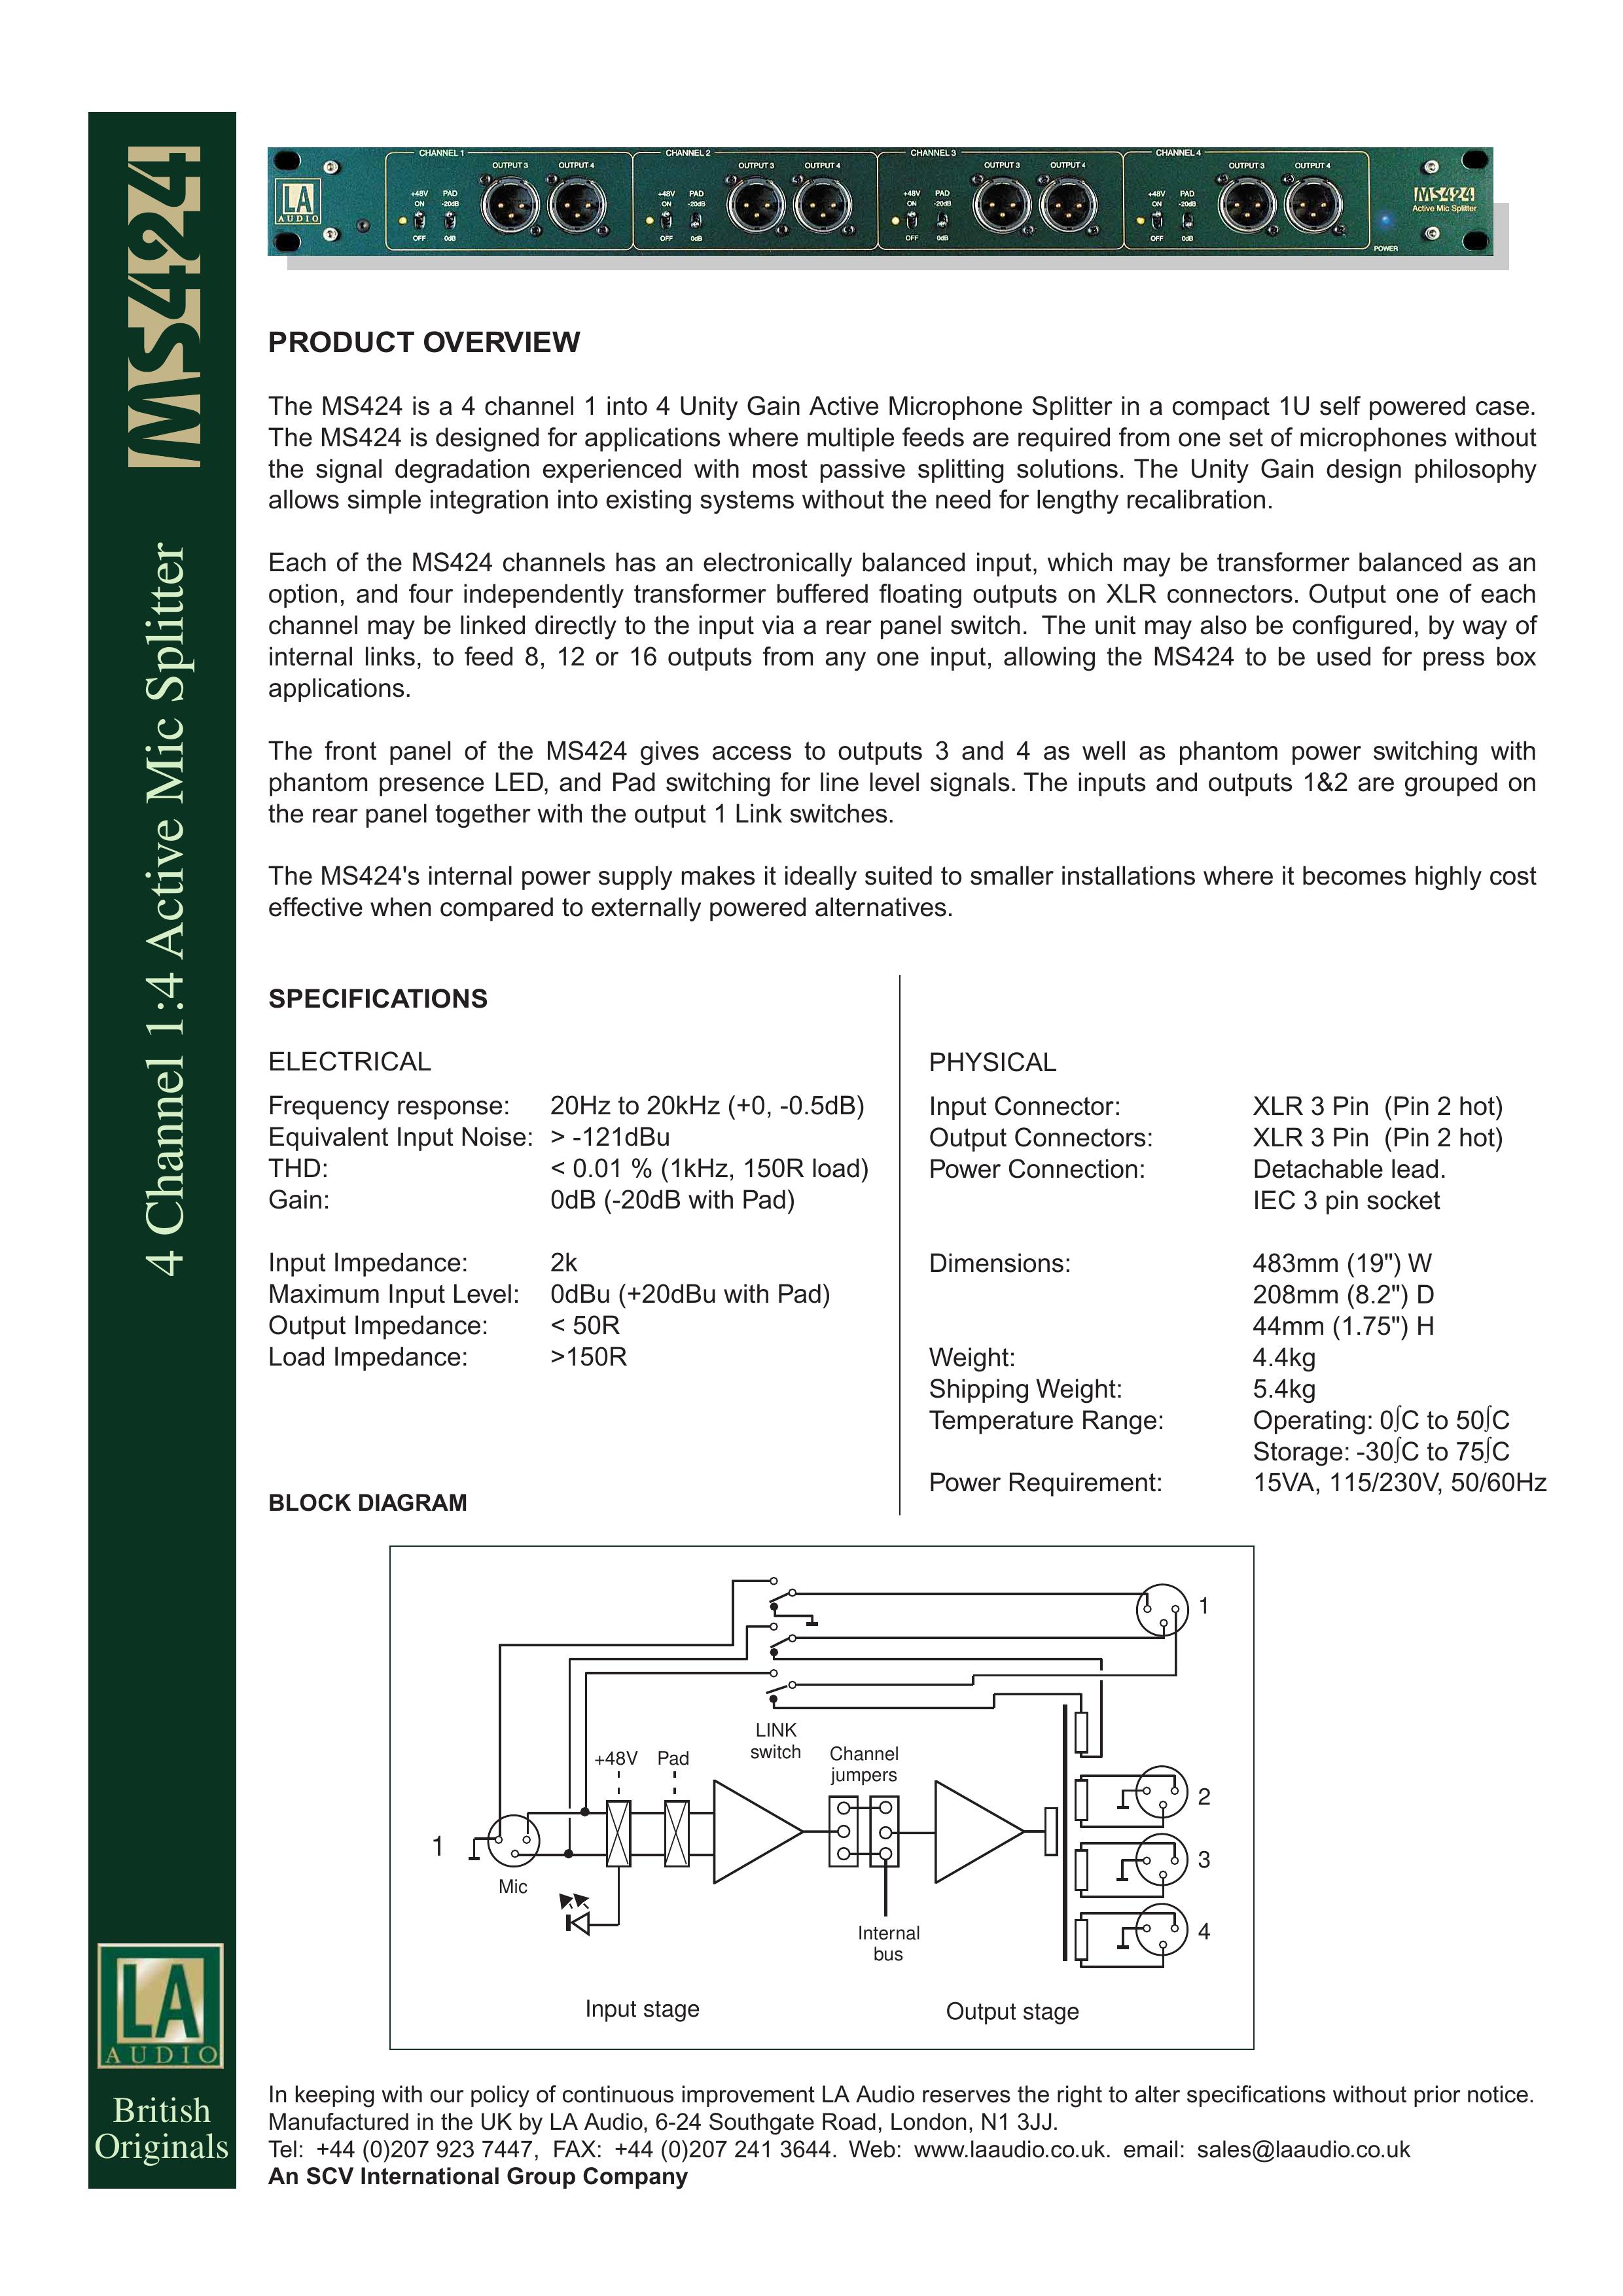 LA Audio Electronic MS424 Microphone User Manual